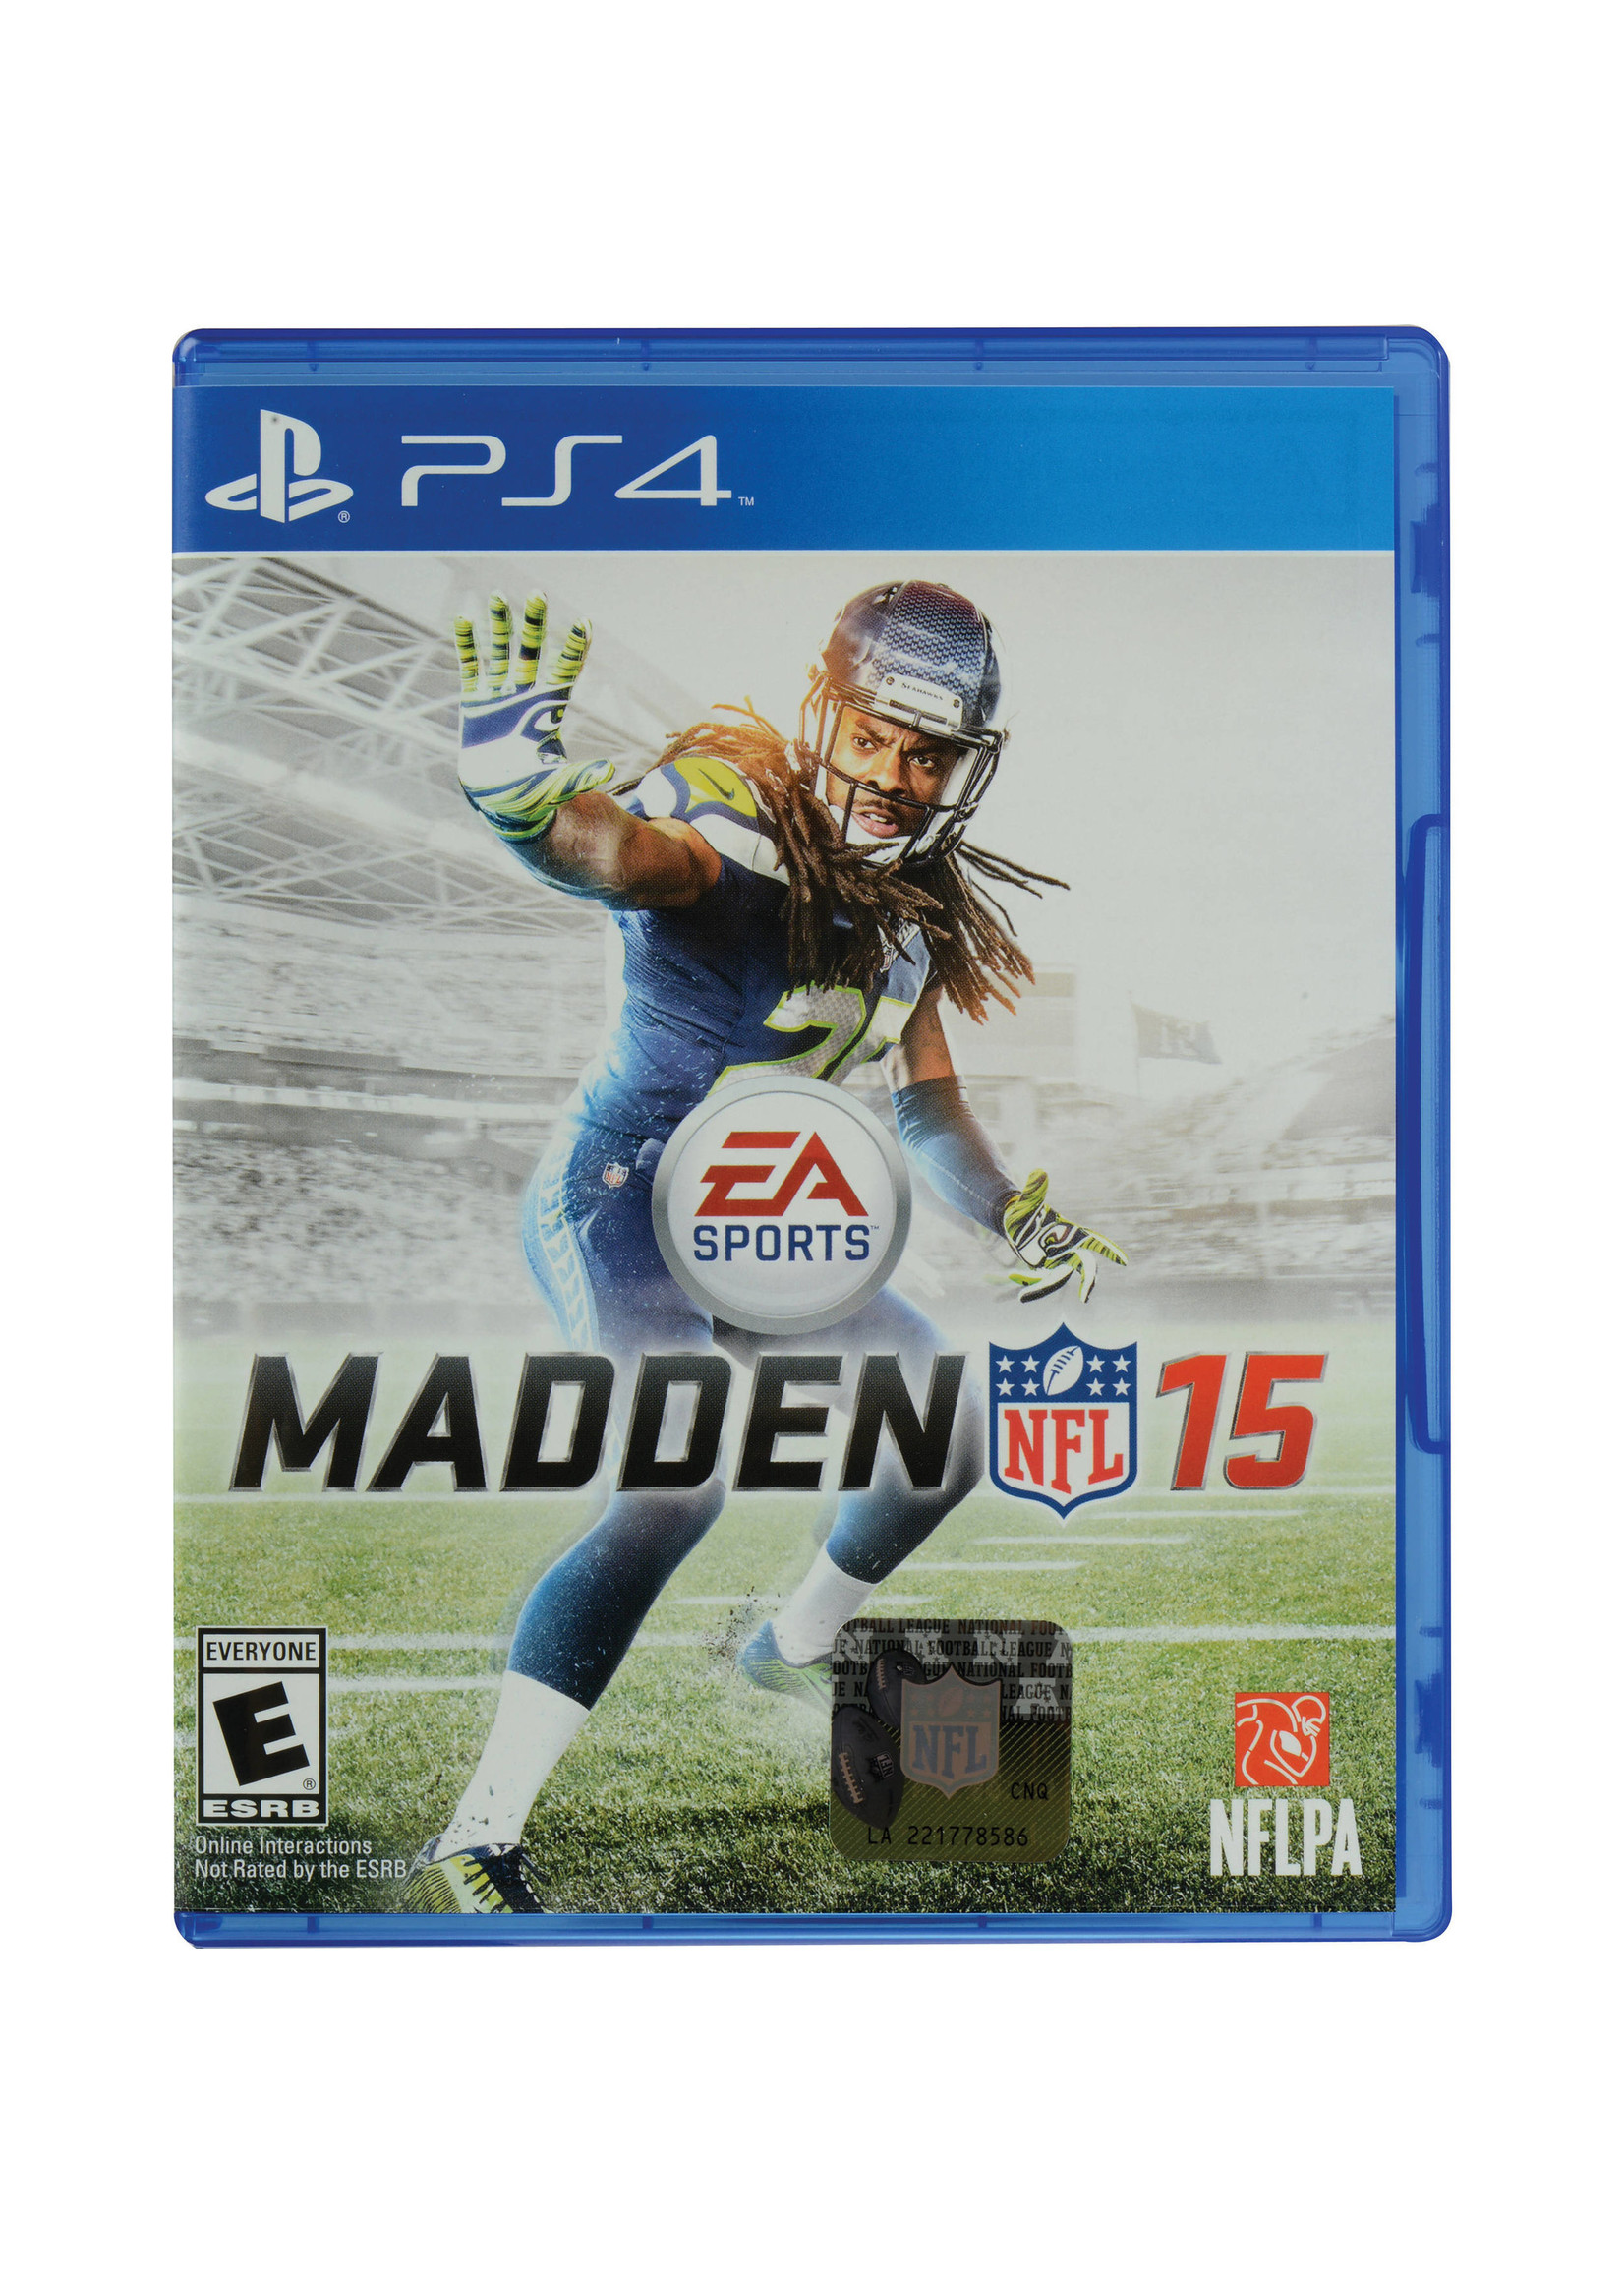 Sony Playstation 4 (PS4) Madden NFL 15